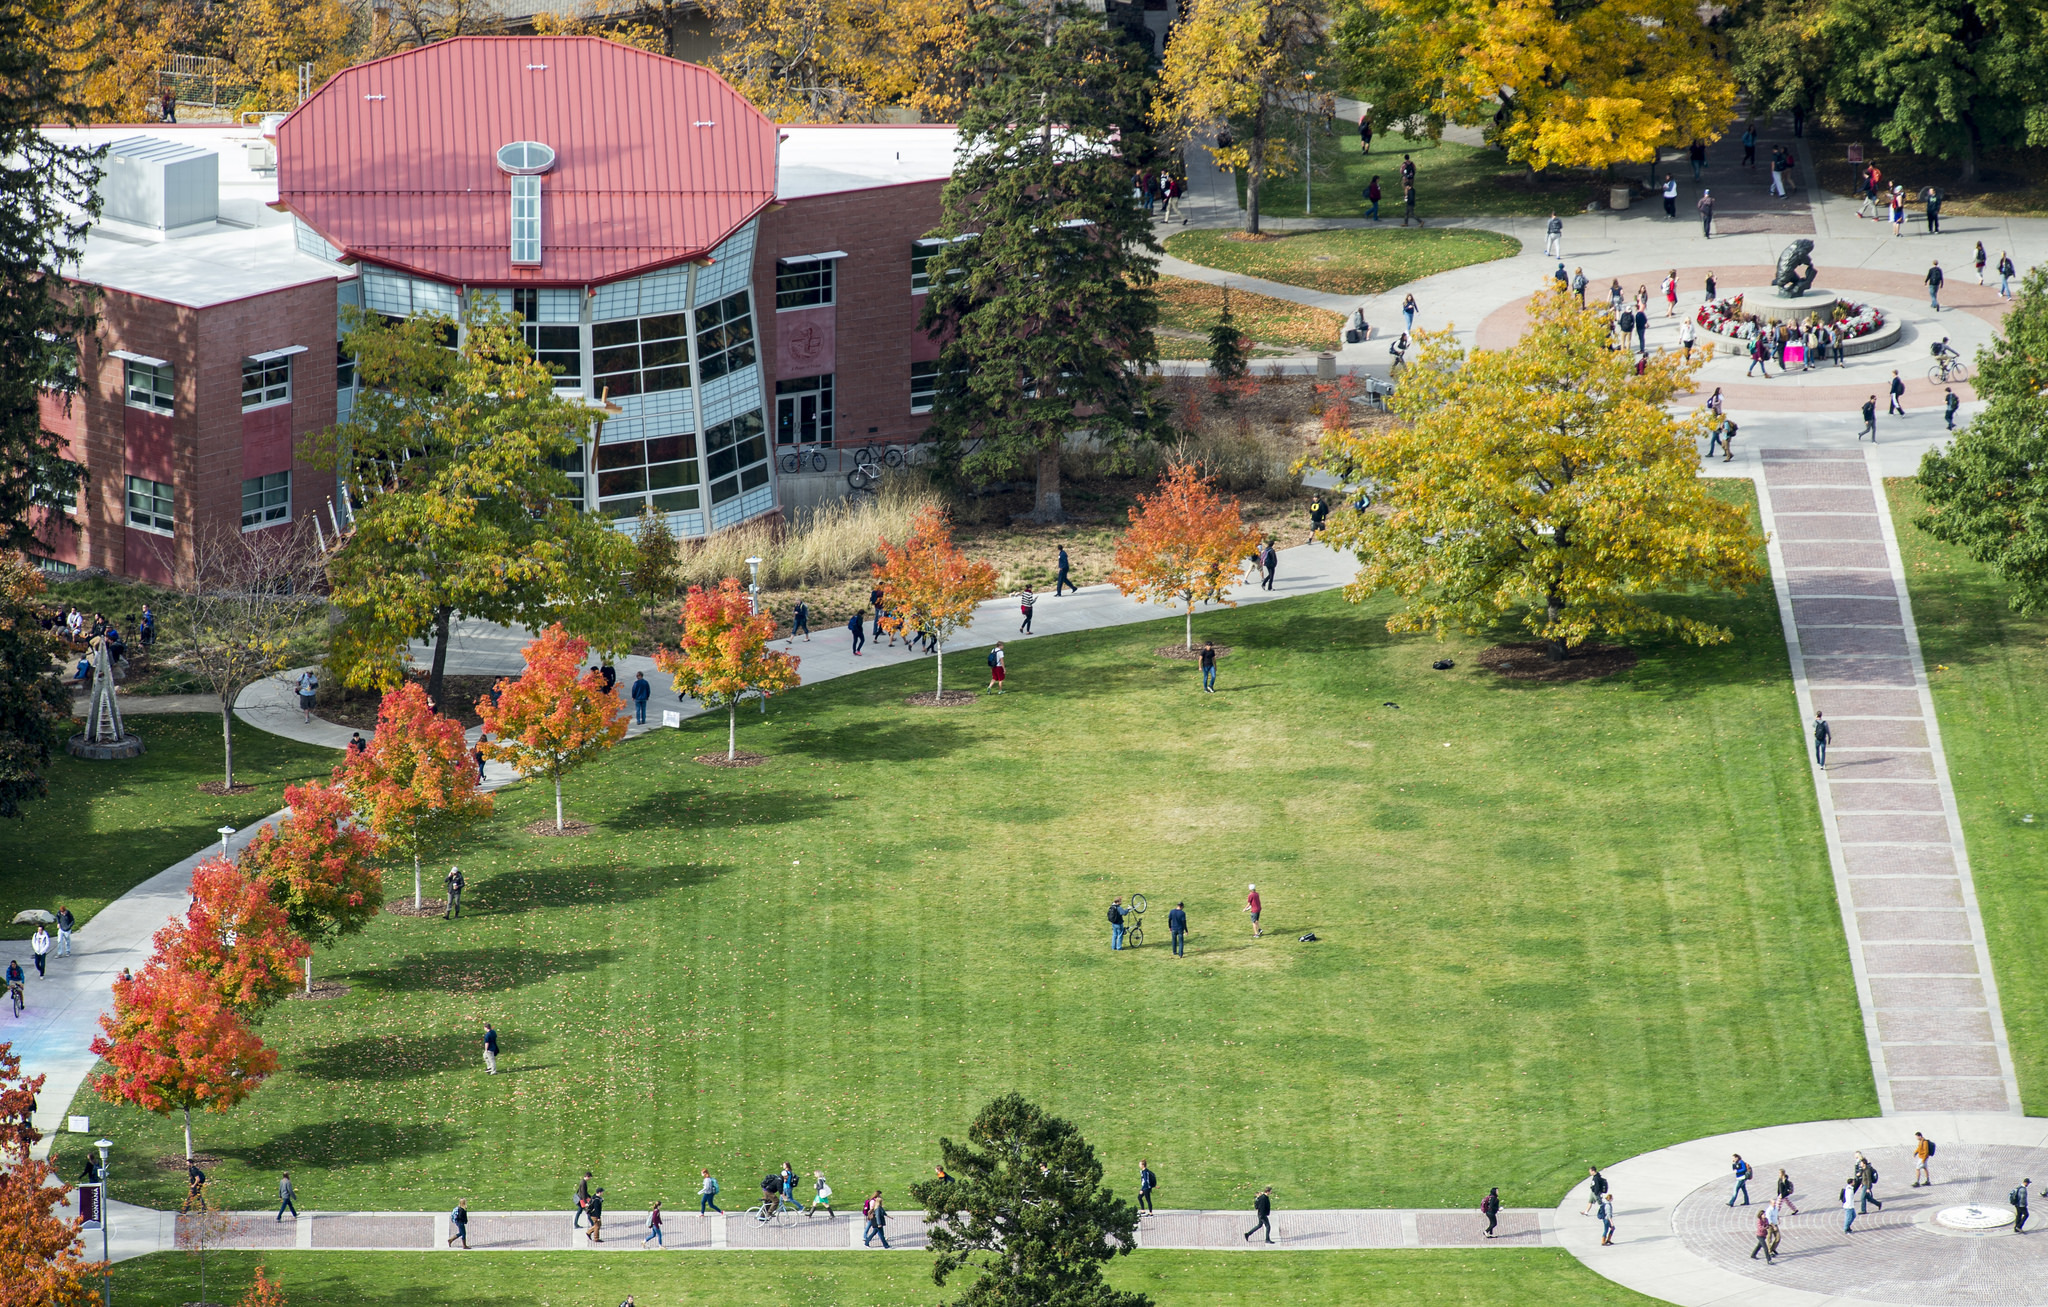 Students walking across Oval in Autumn